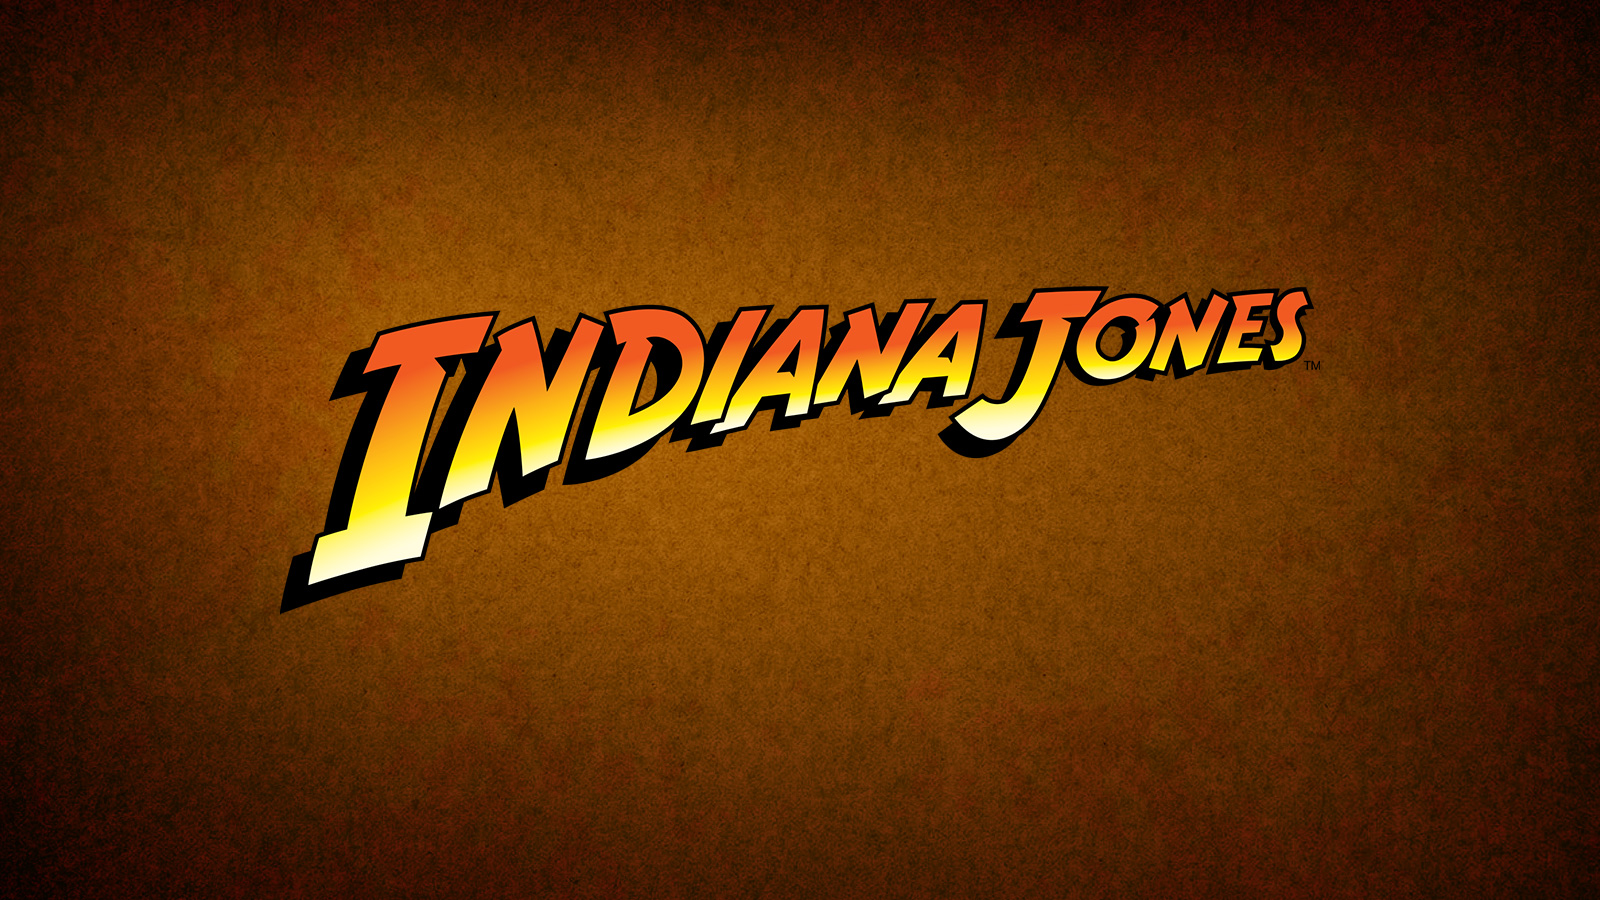 Four original INDIANA JONES films plus television series all coming May 31,  2023 to #DisneyPlus